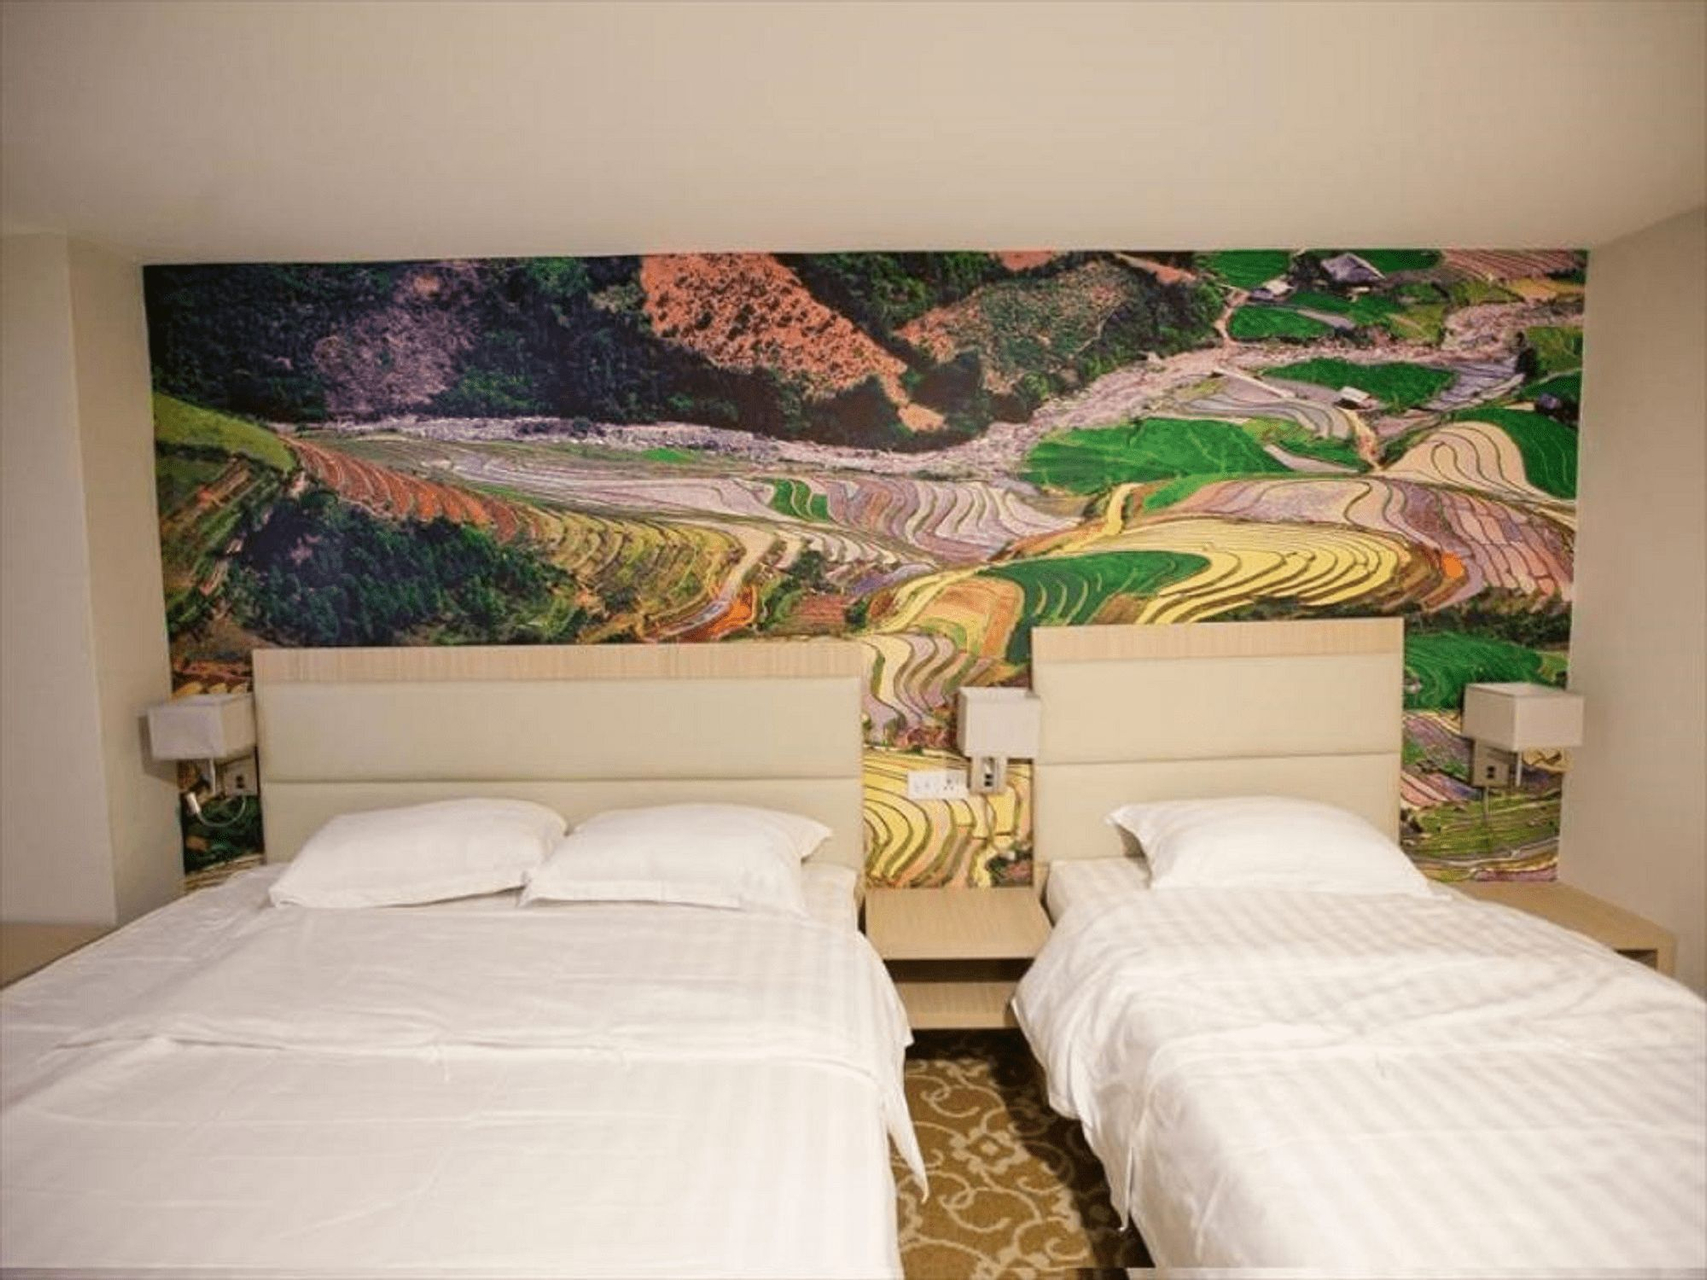 Bedroom 3, Pingsa Hotel, Pulau Penang